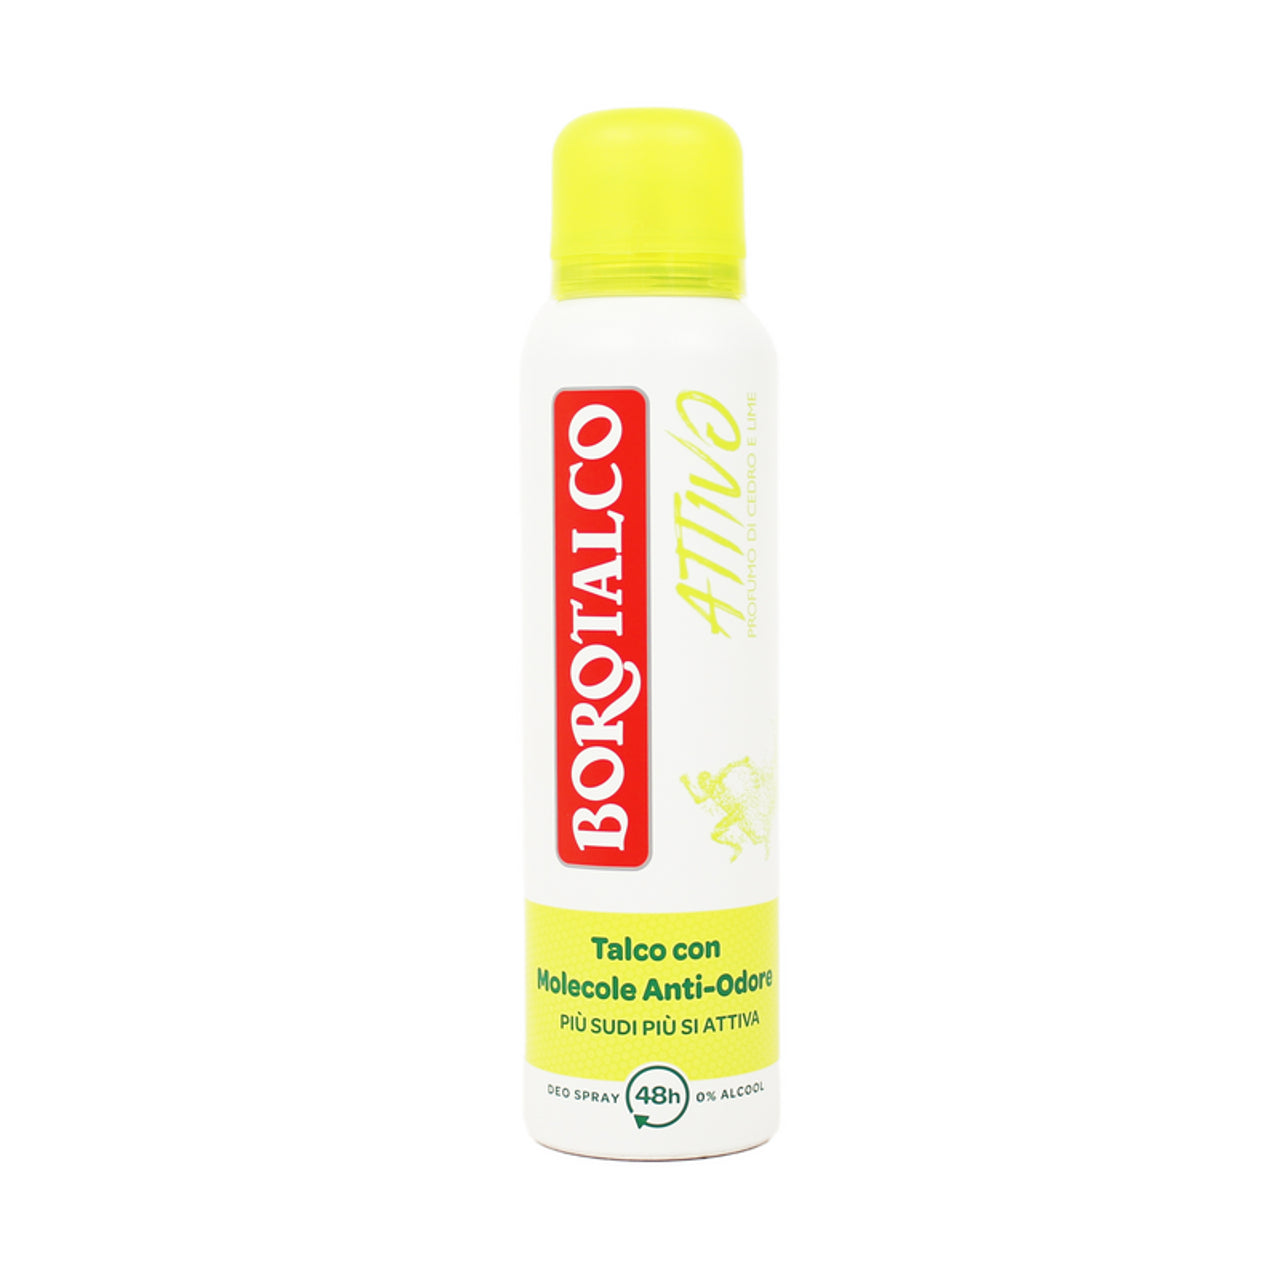 Aktiivinen borotalco deodorant Spray tuoksu seetri ja kalkki 150 ml